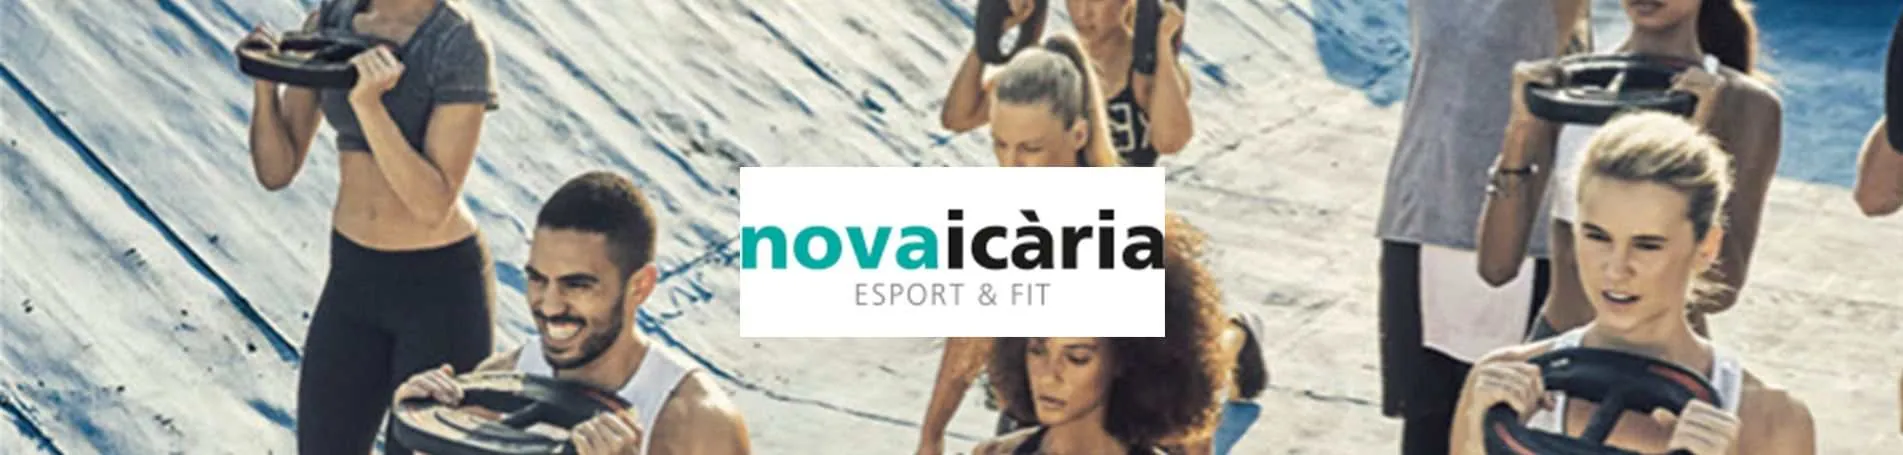 Marketing Outsourcing para Nova Icaria Esports & Fit